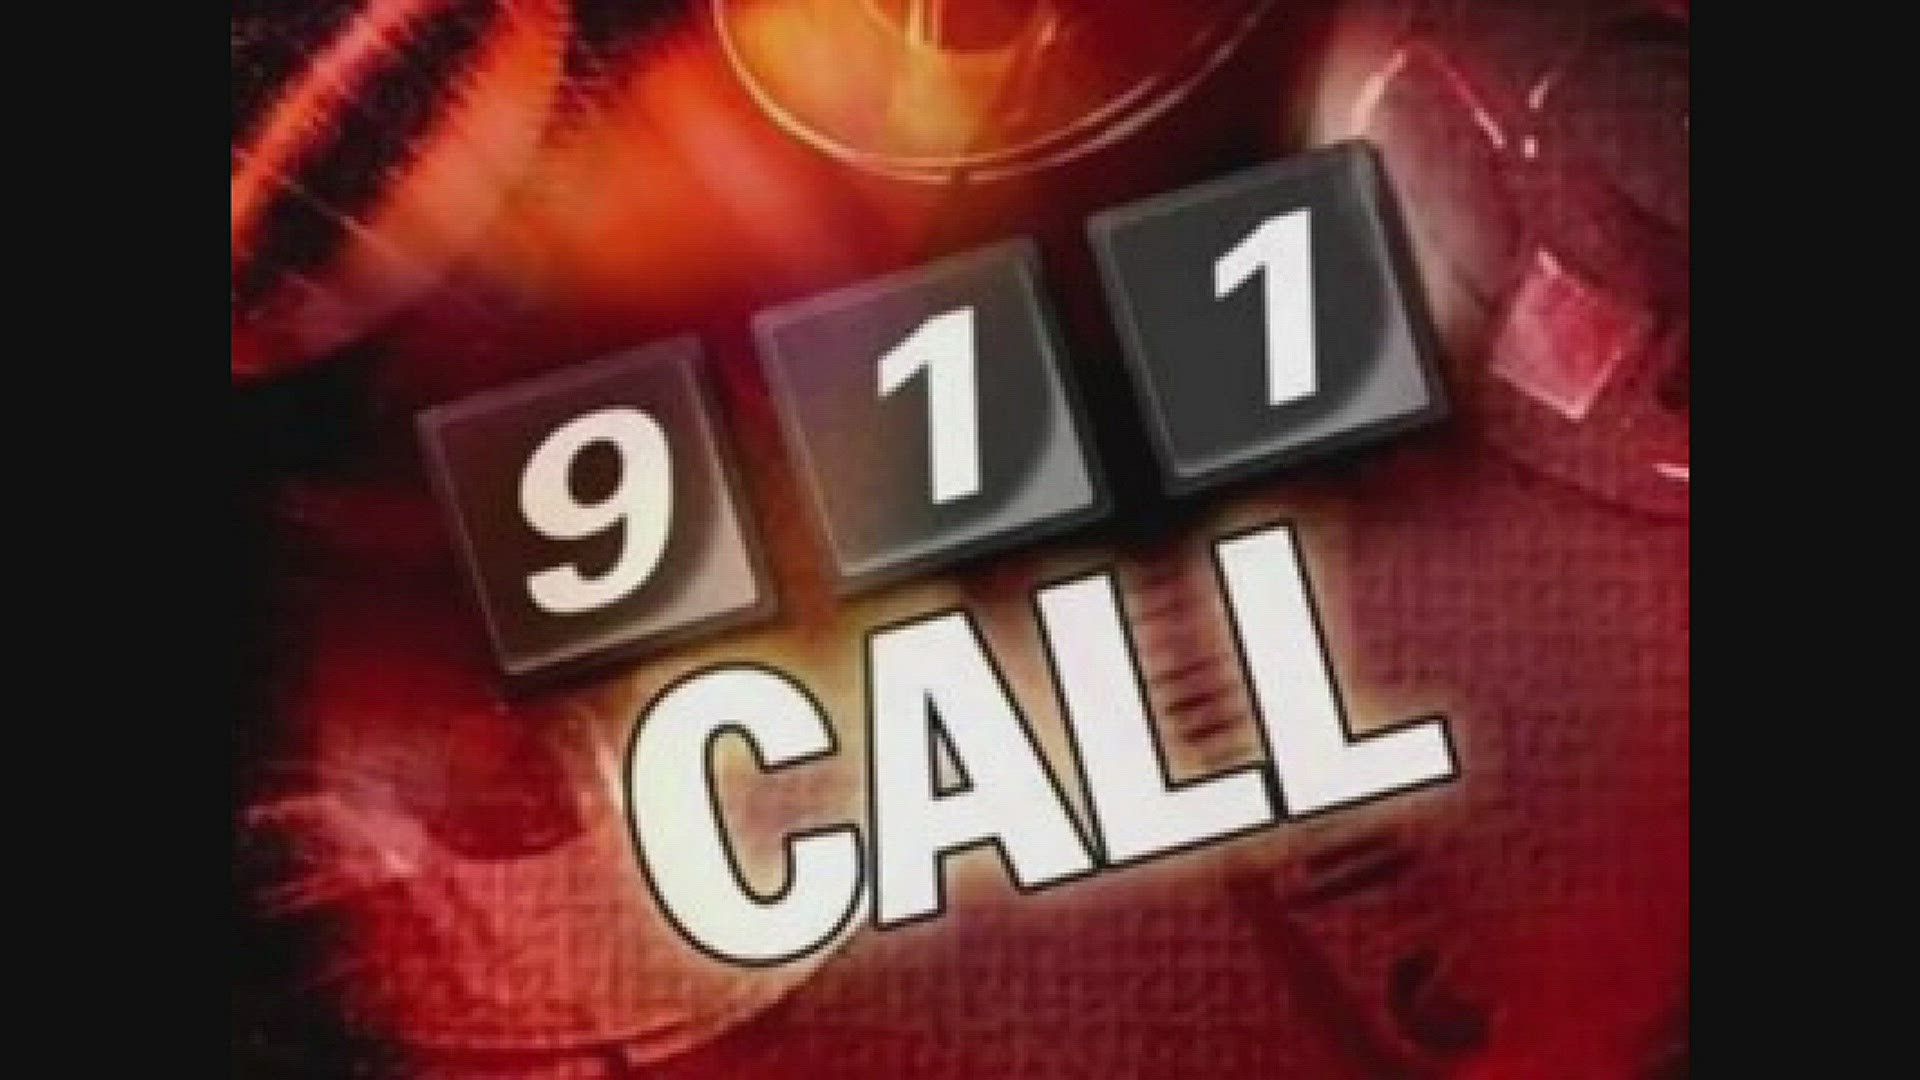 911 call after car crashes into Parma home